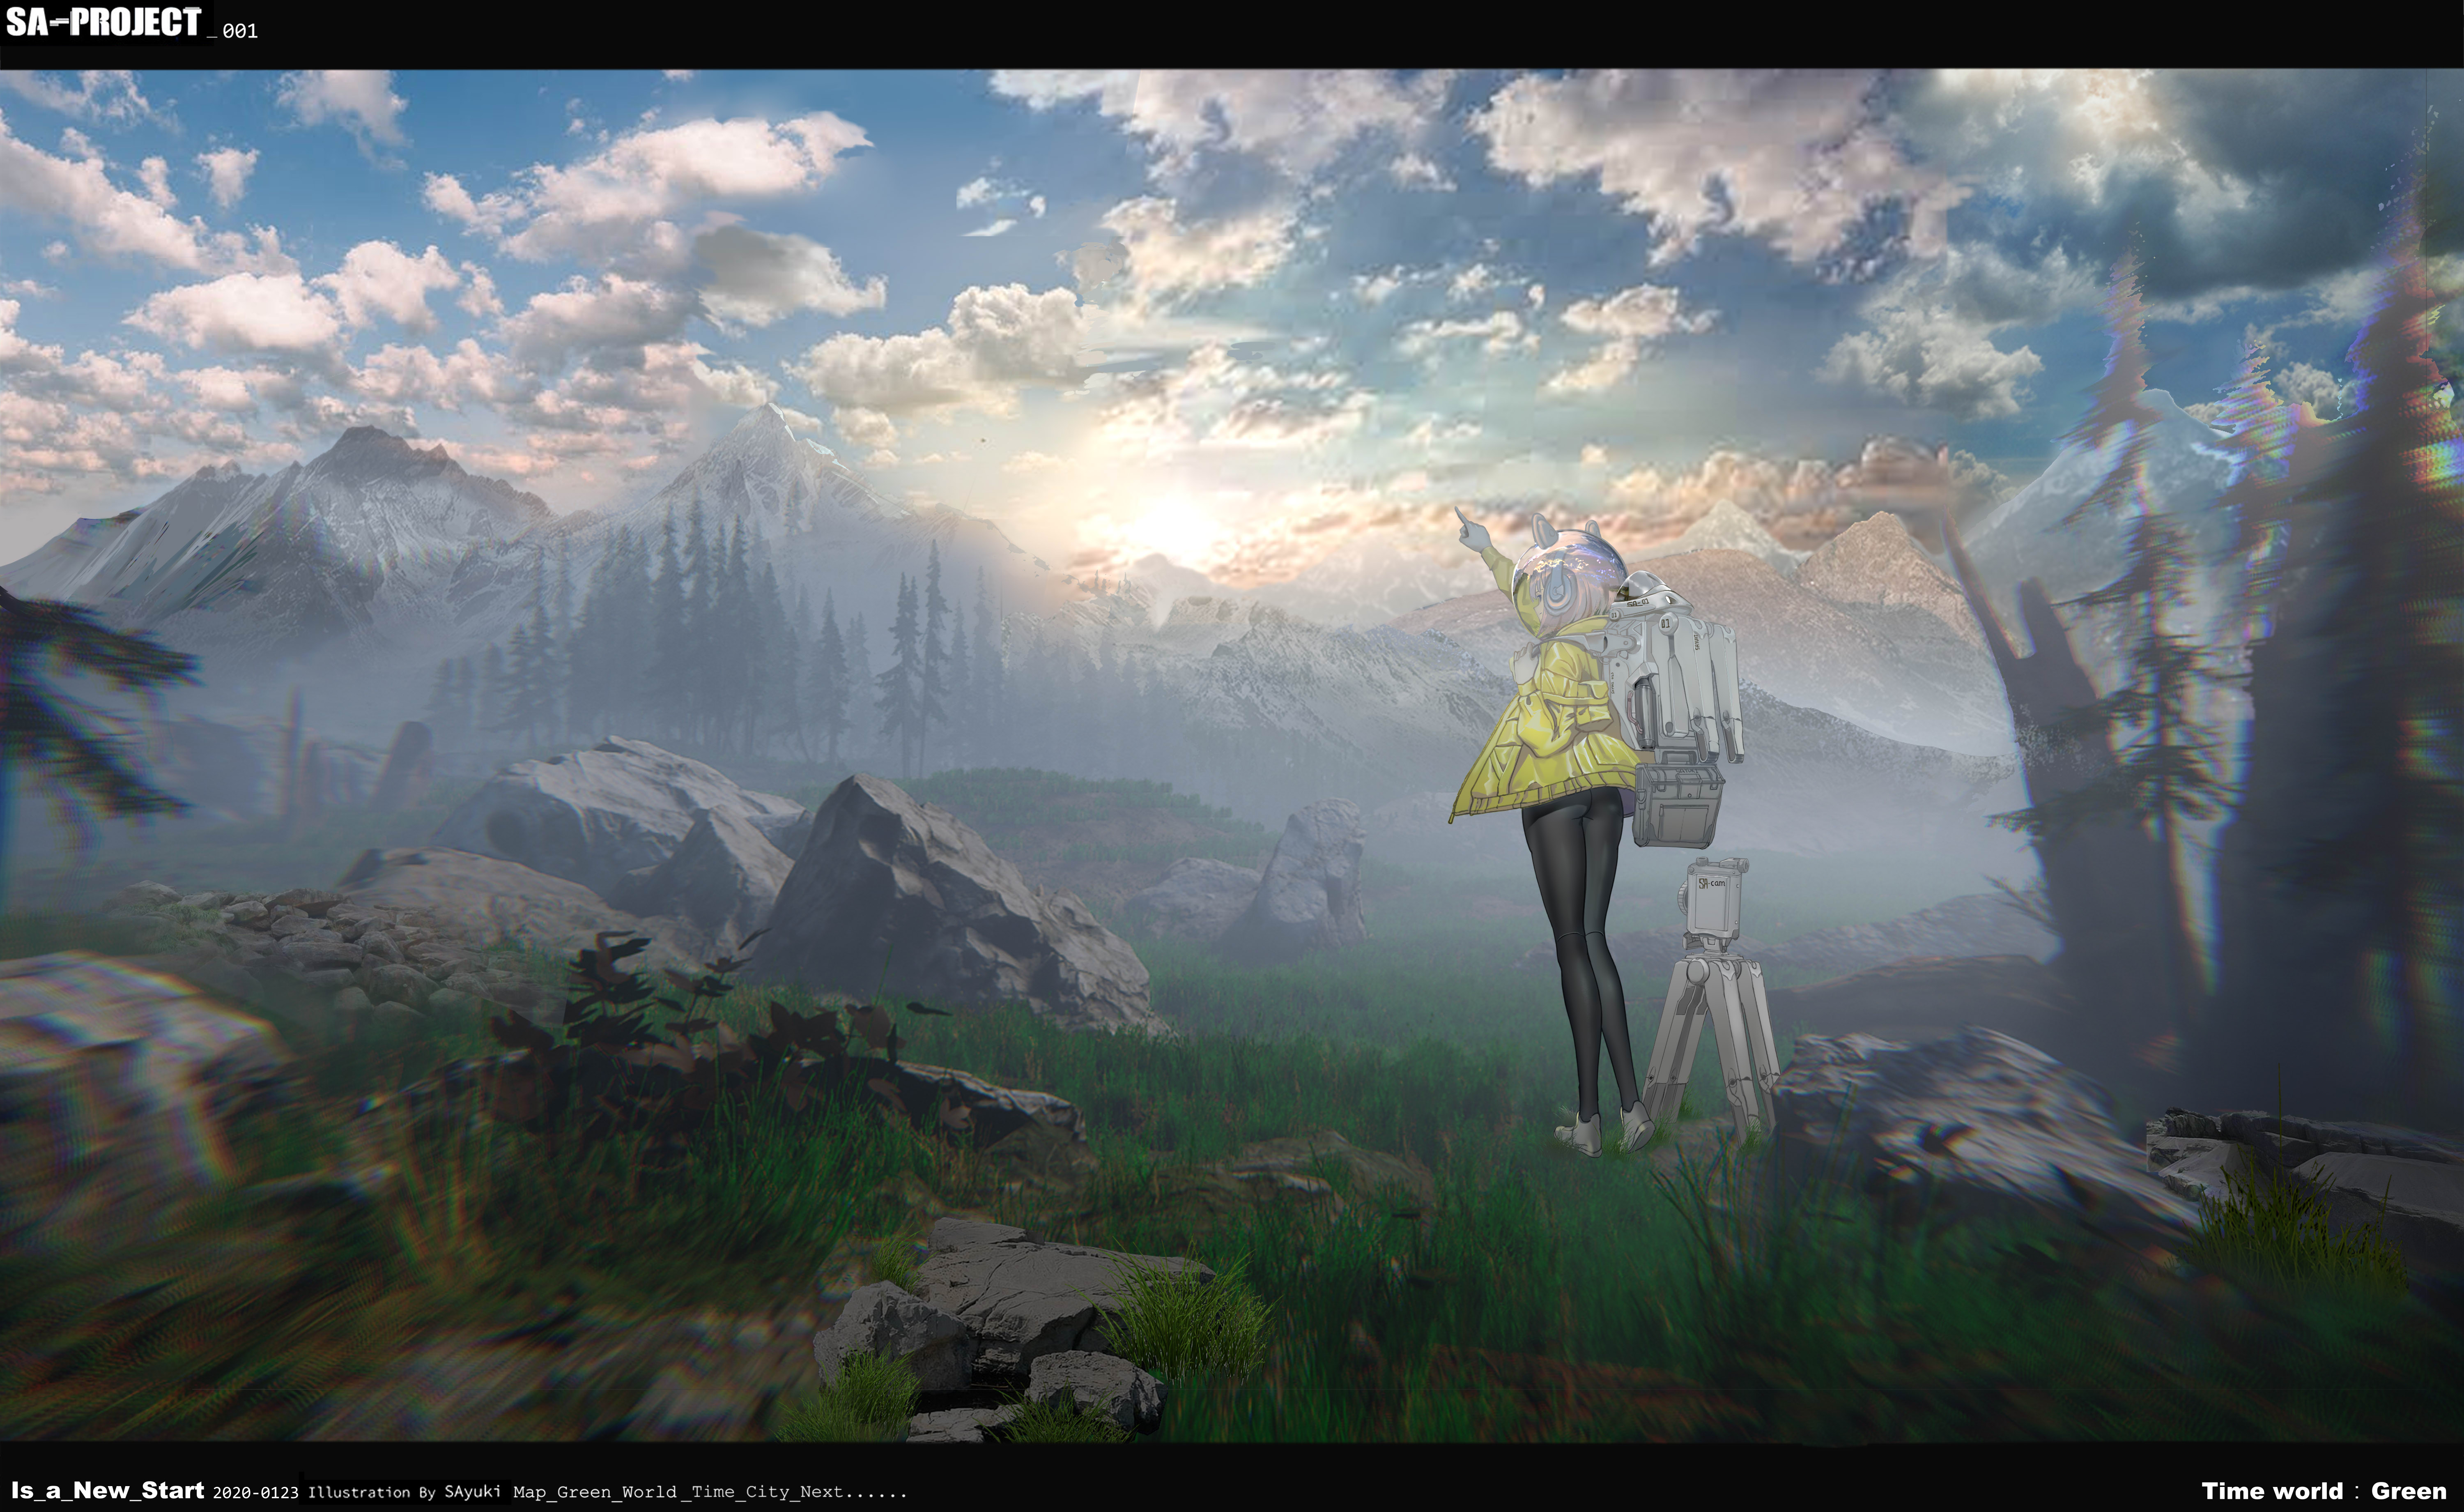 Anime 6000x3681 anime 2D digital art artwork animal ears headphones sky mountains clouds landscape